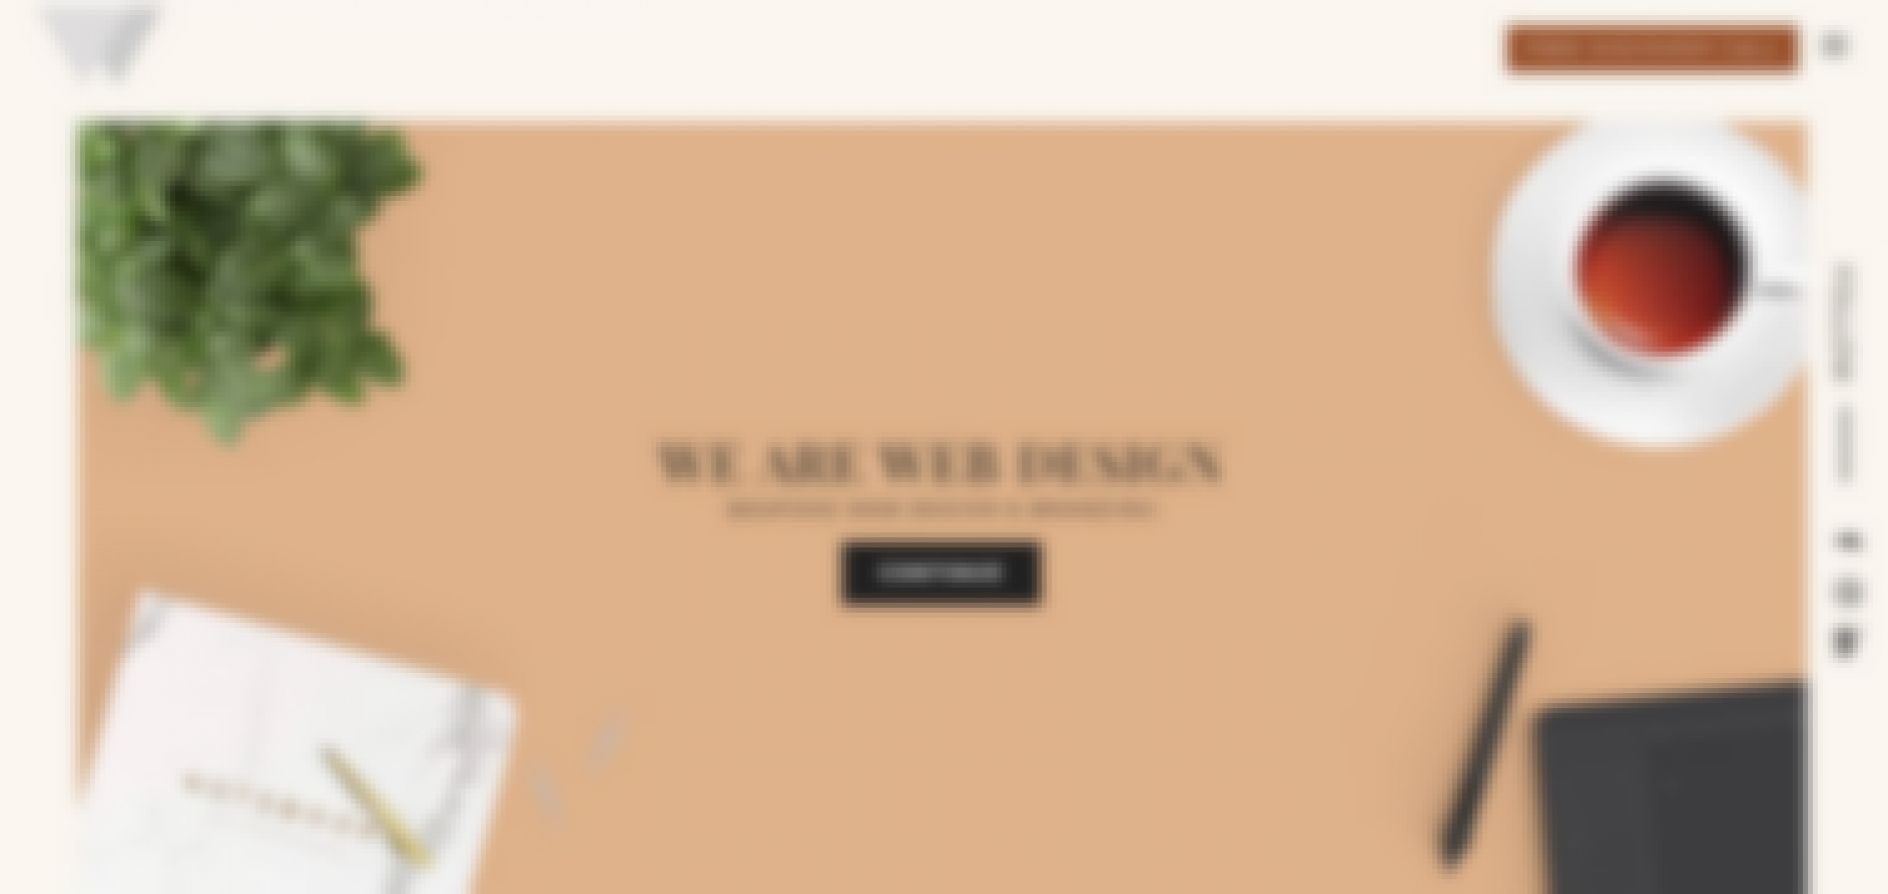 we are web design website designers melbourne